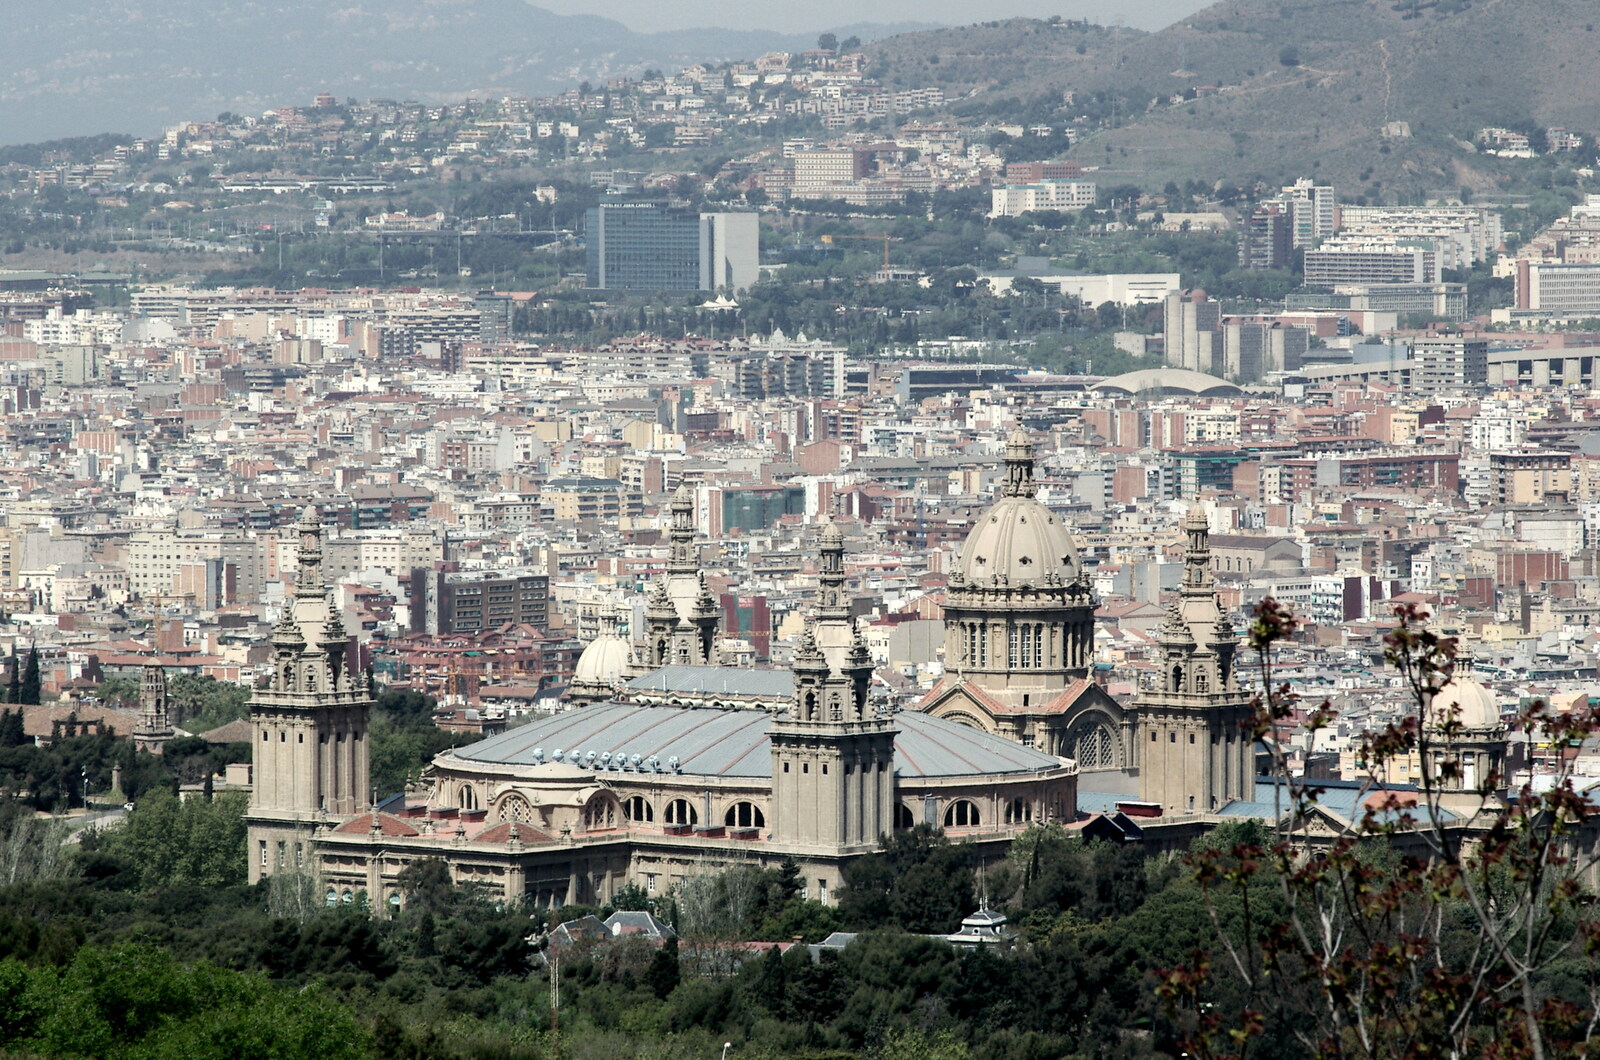 Another city view from Montjuïc and Sant Feliu de Guíxols, Barcelona, Catalunya - 30th April 2005